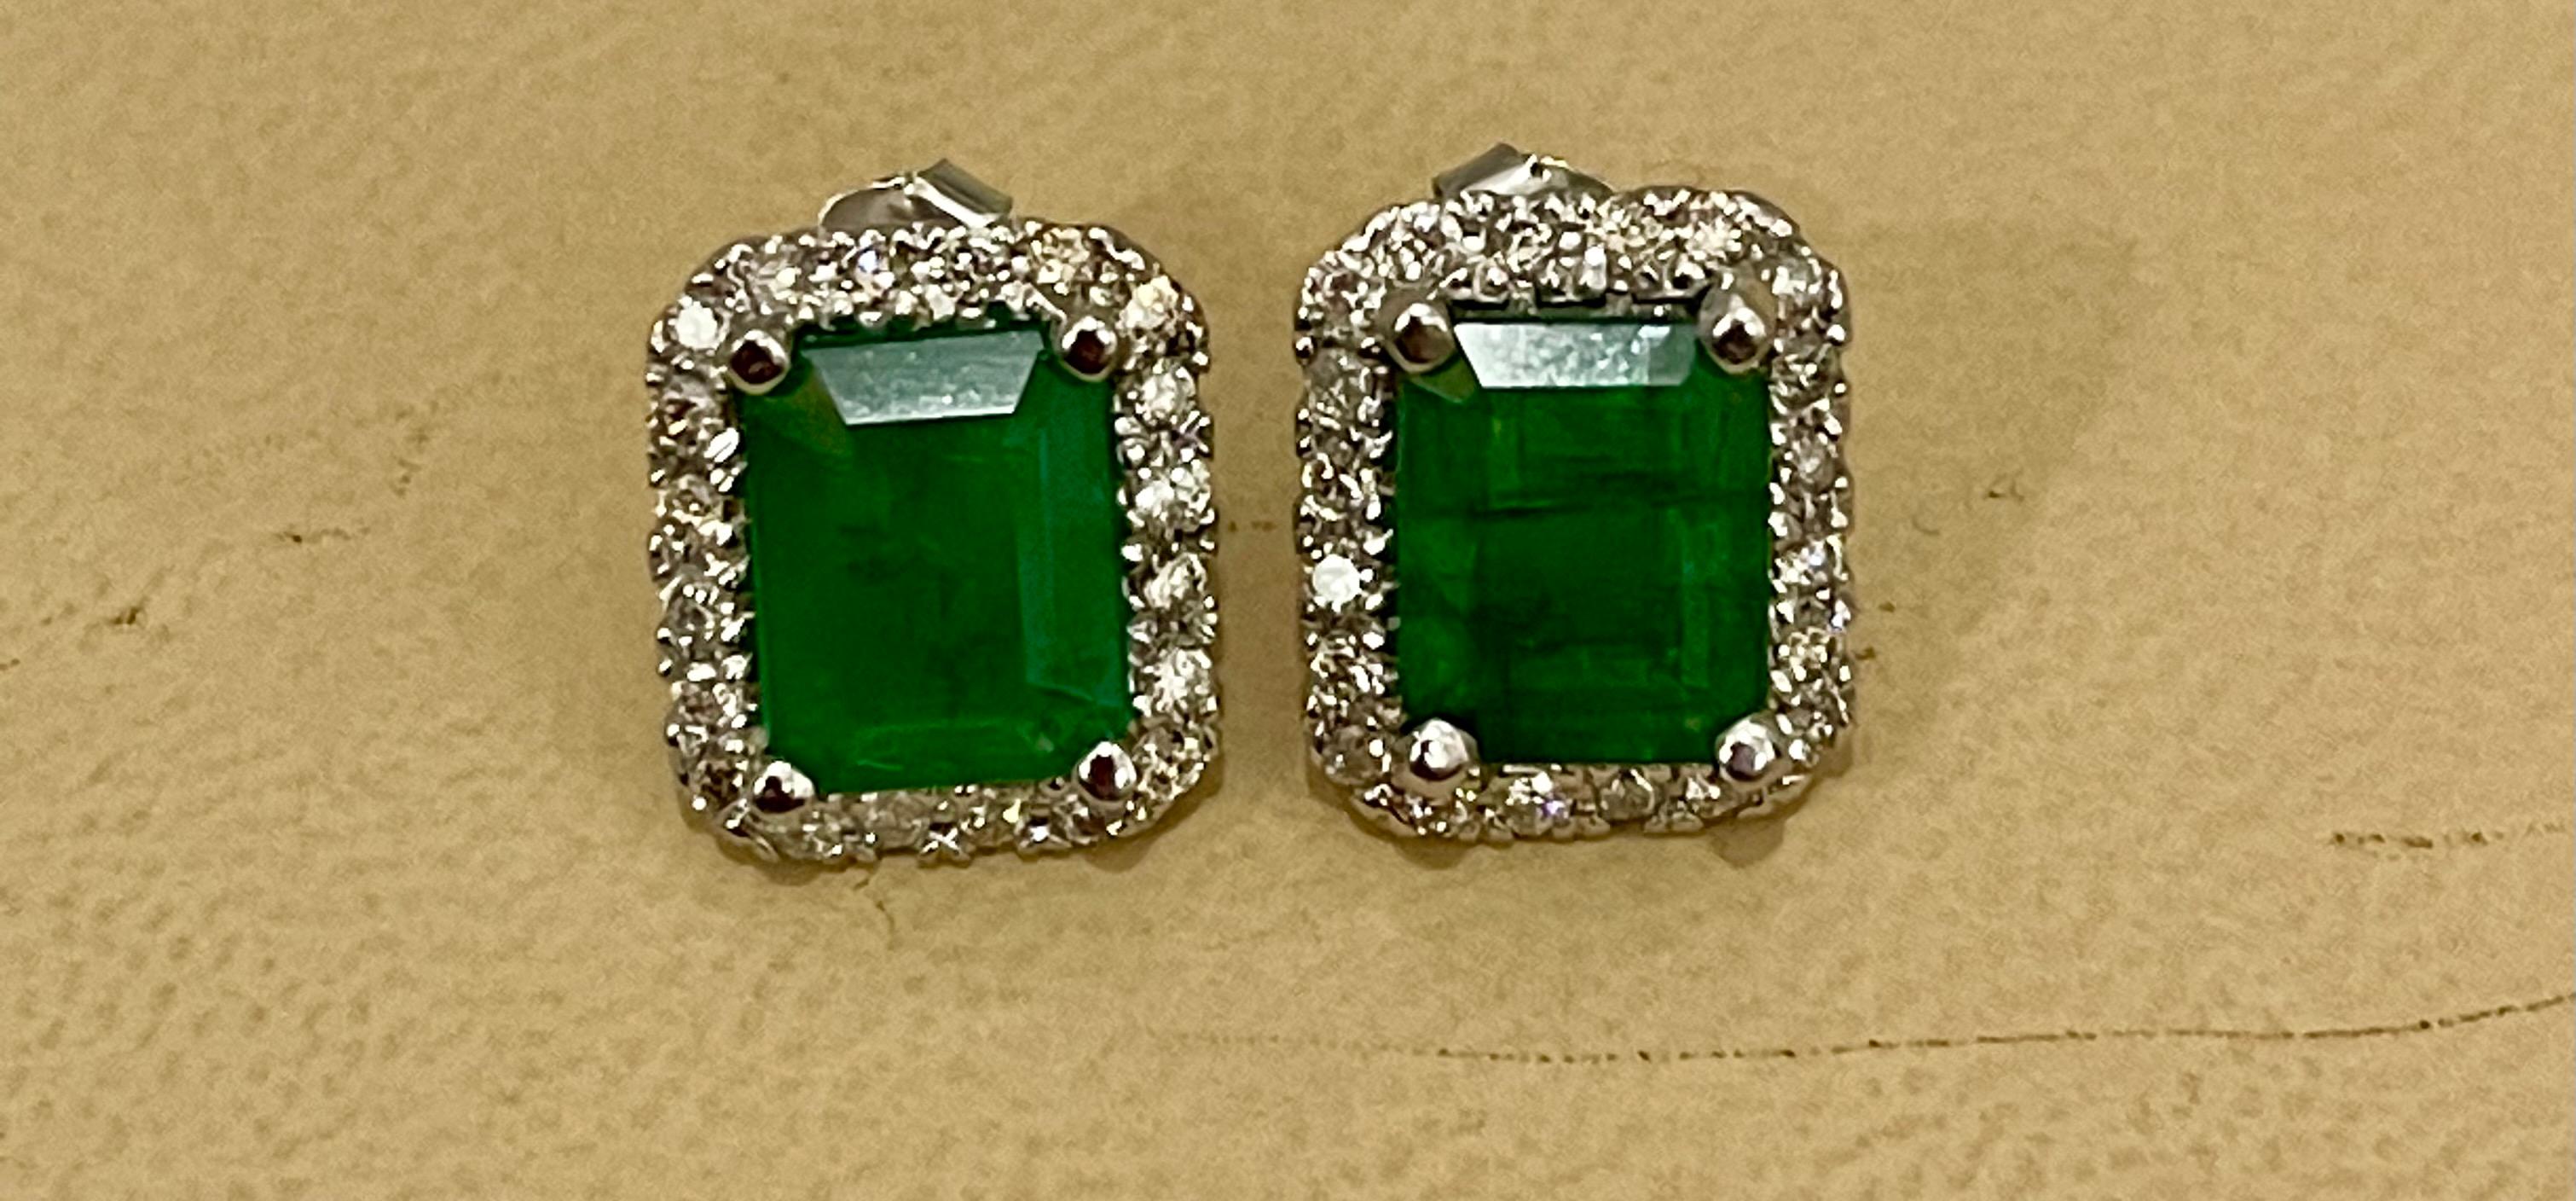 7 Carat Emerald Cut Emerald & 1.5 Ct Diamond Stud Earrings 14 Kt White Gold 10